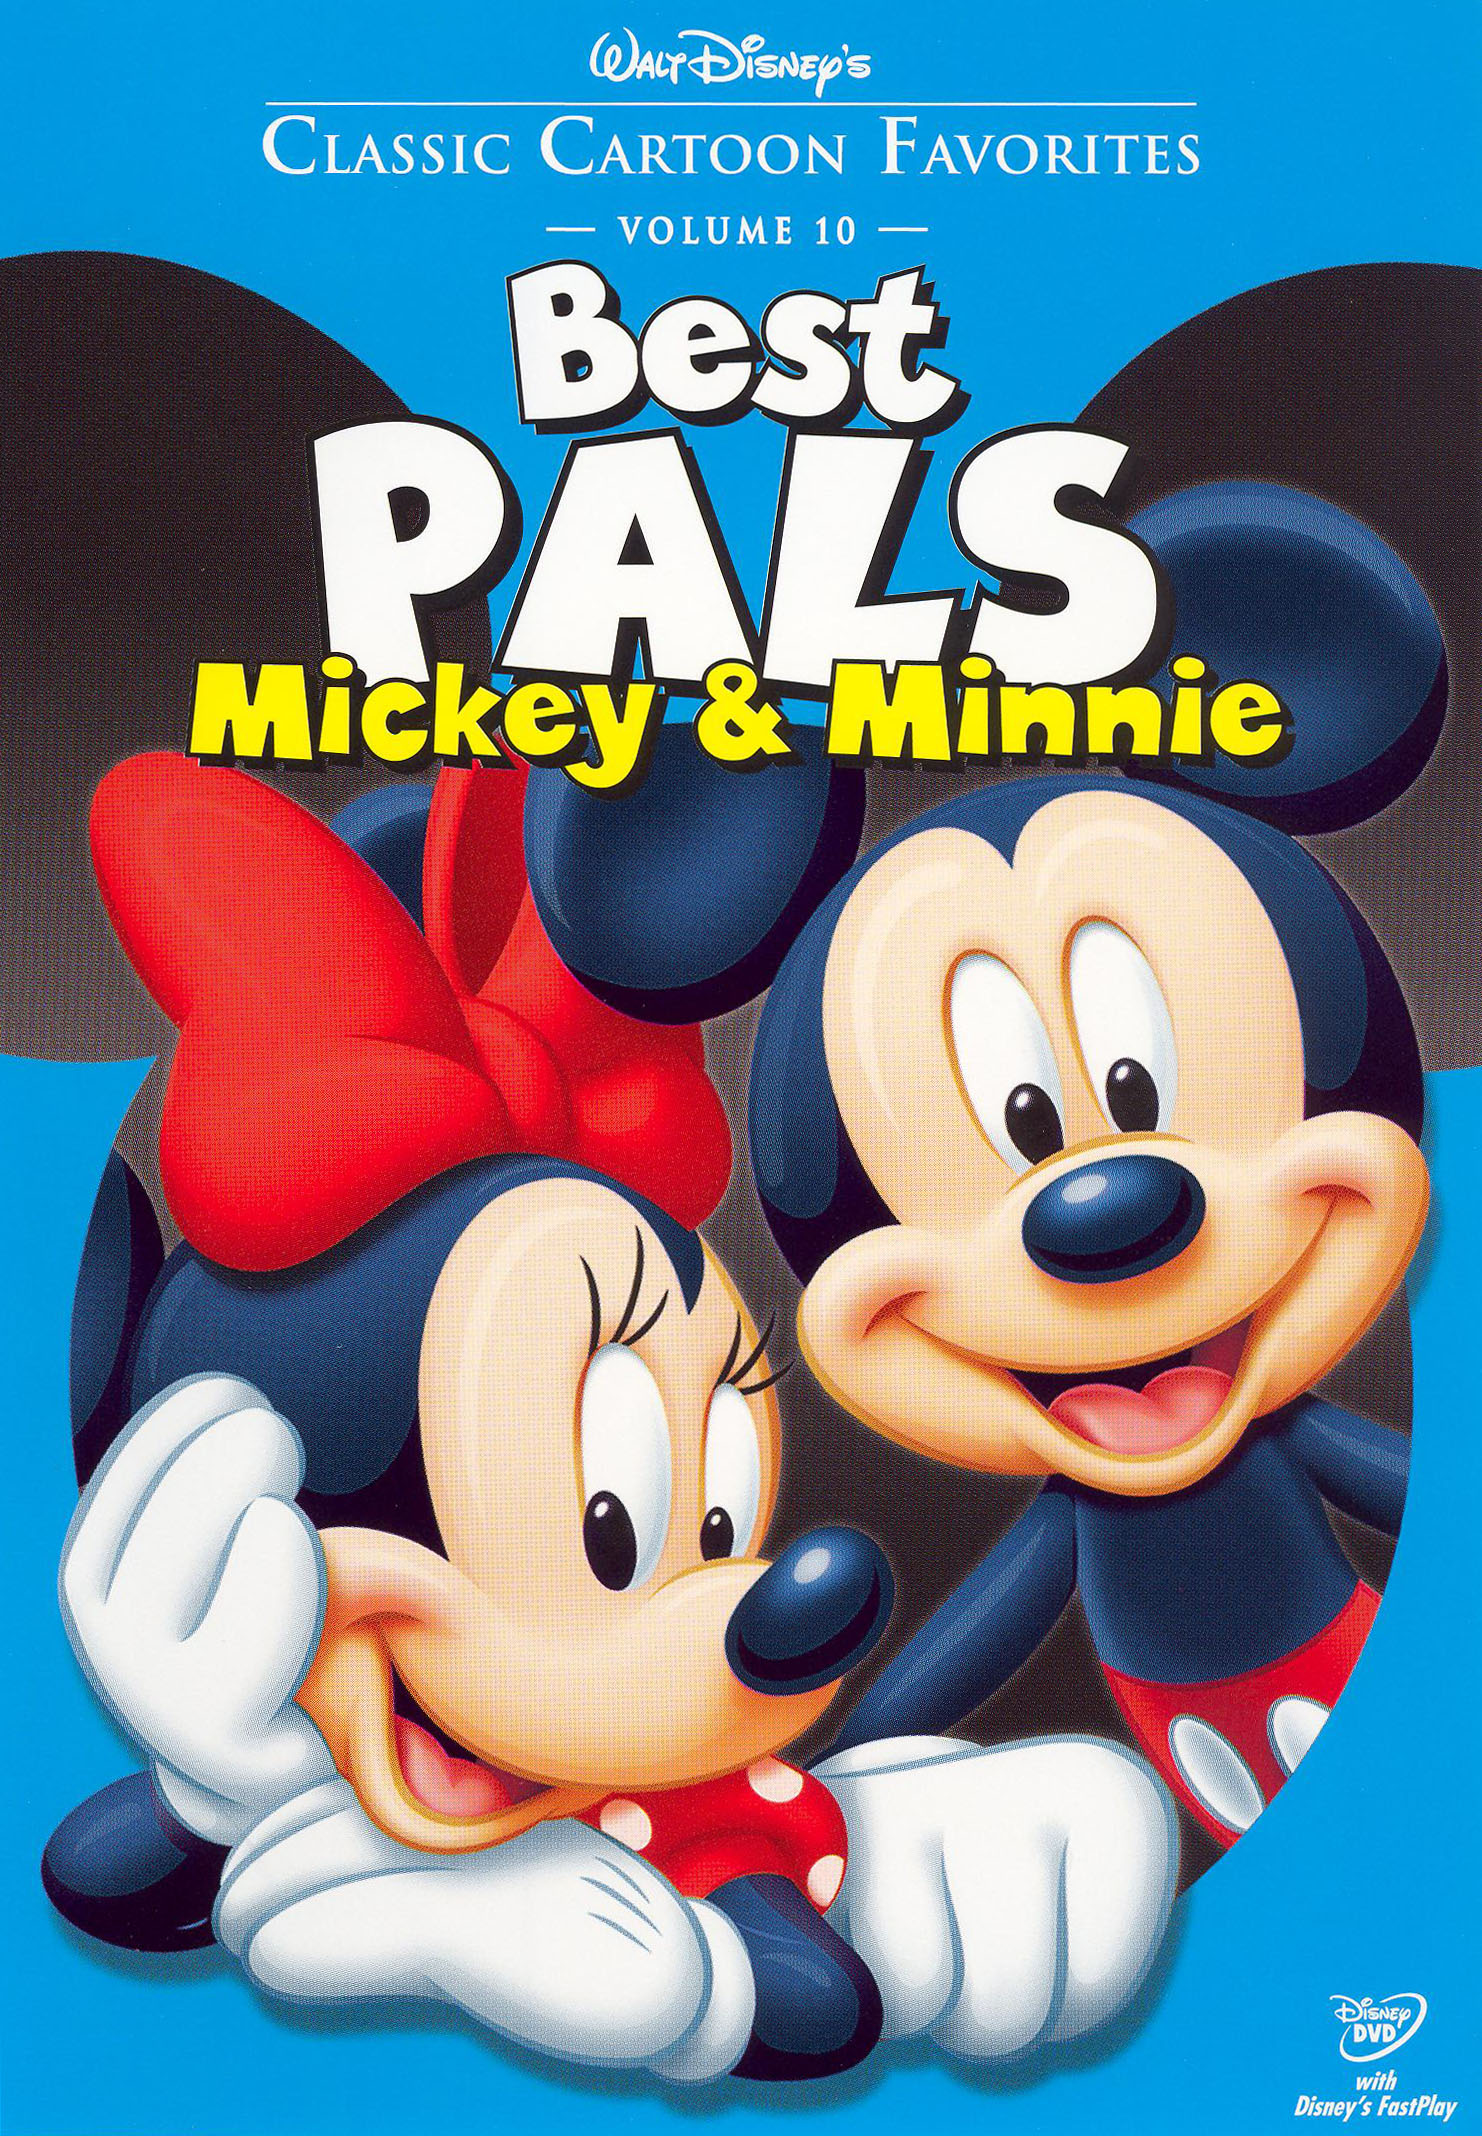 My Disney Classic Cartoon Favorites Dvd Collection Youtube - Photos